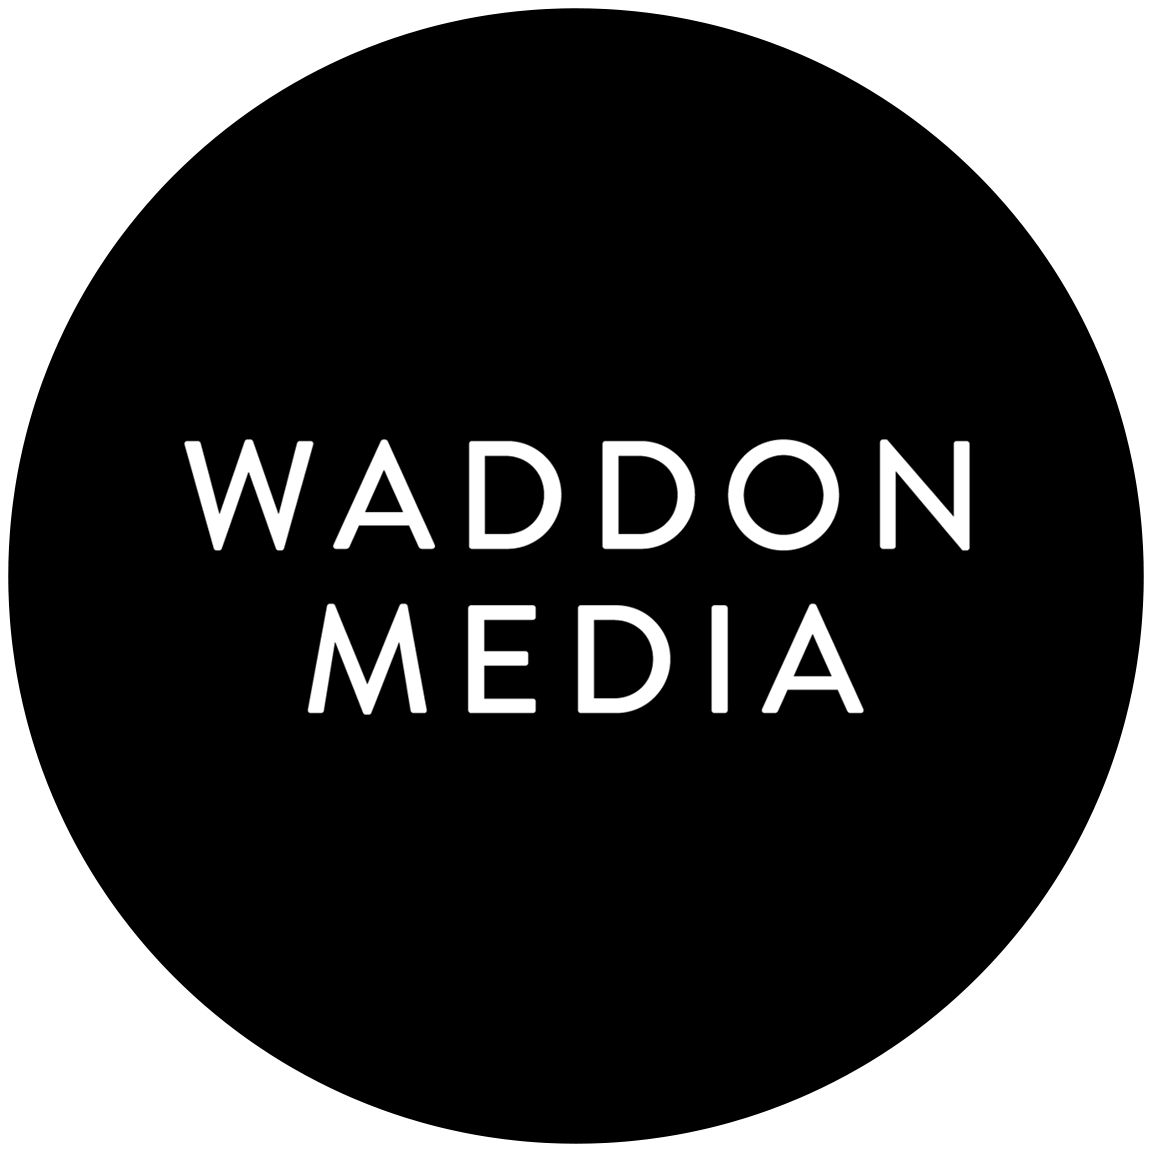 Waddon Media